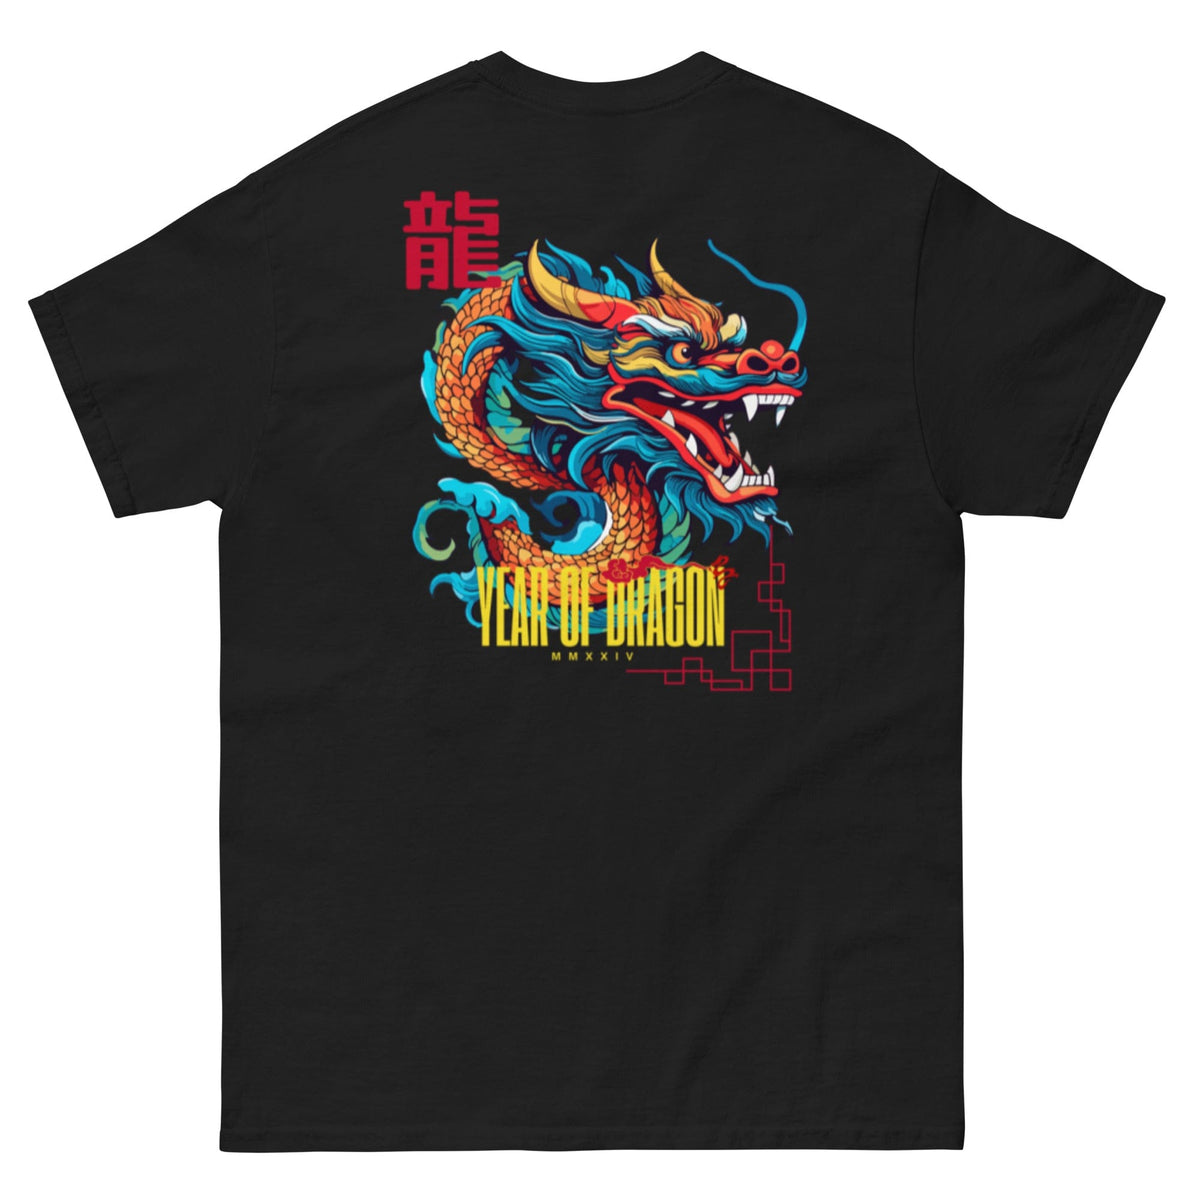 Year of Dragon T-shirt Black